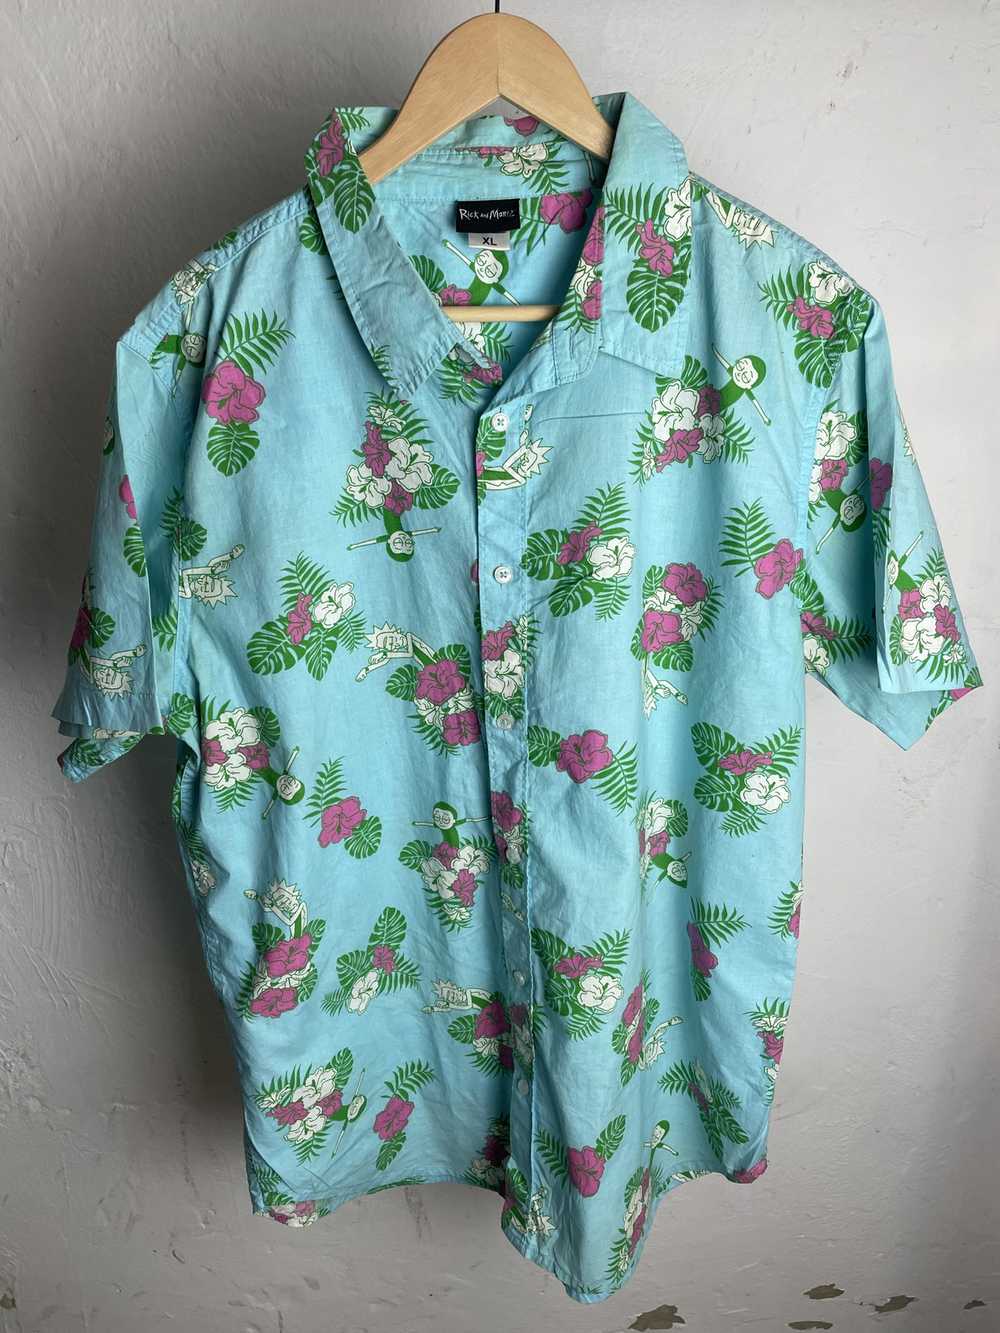 Vintage Hawaiian Vintage Shirt rick & morty - image 1